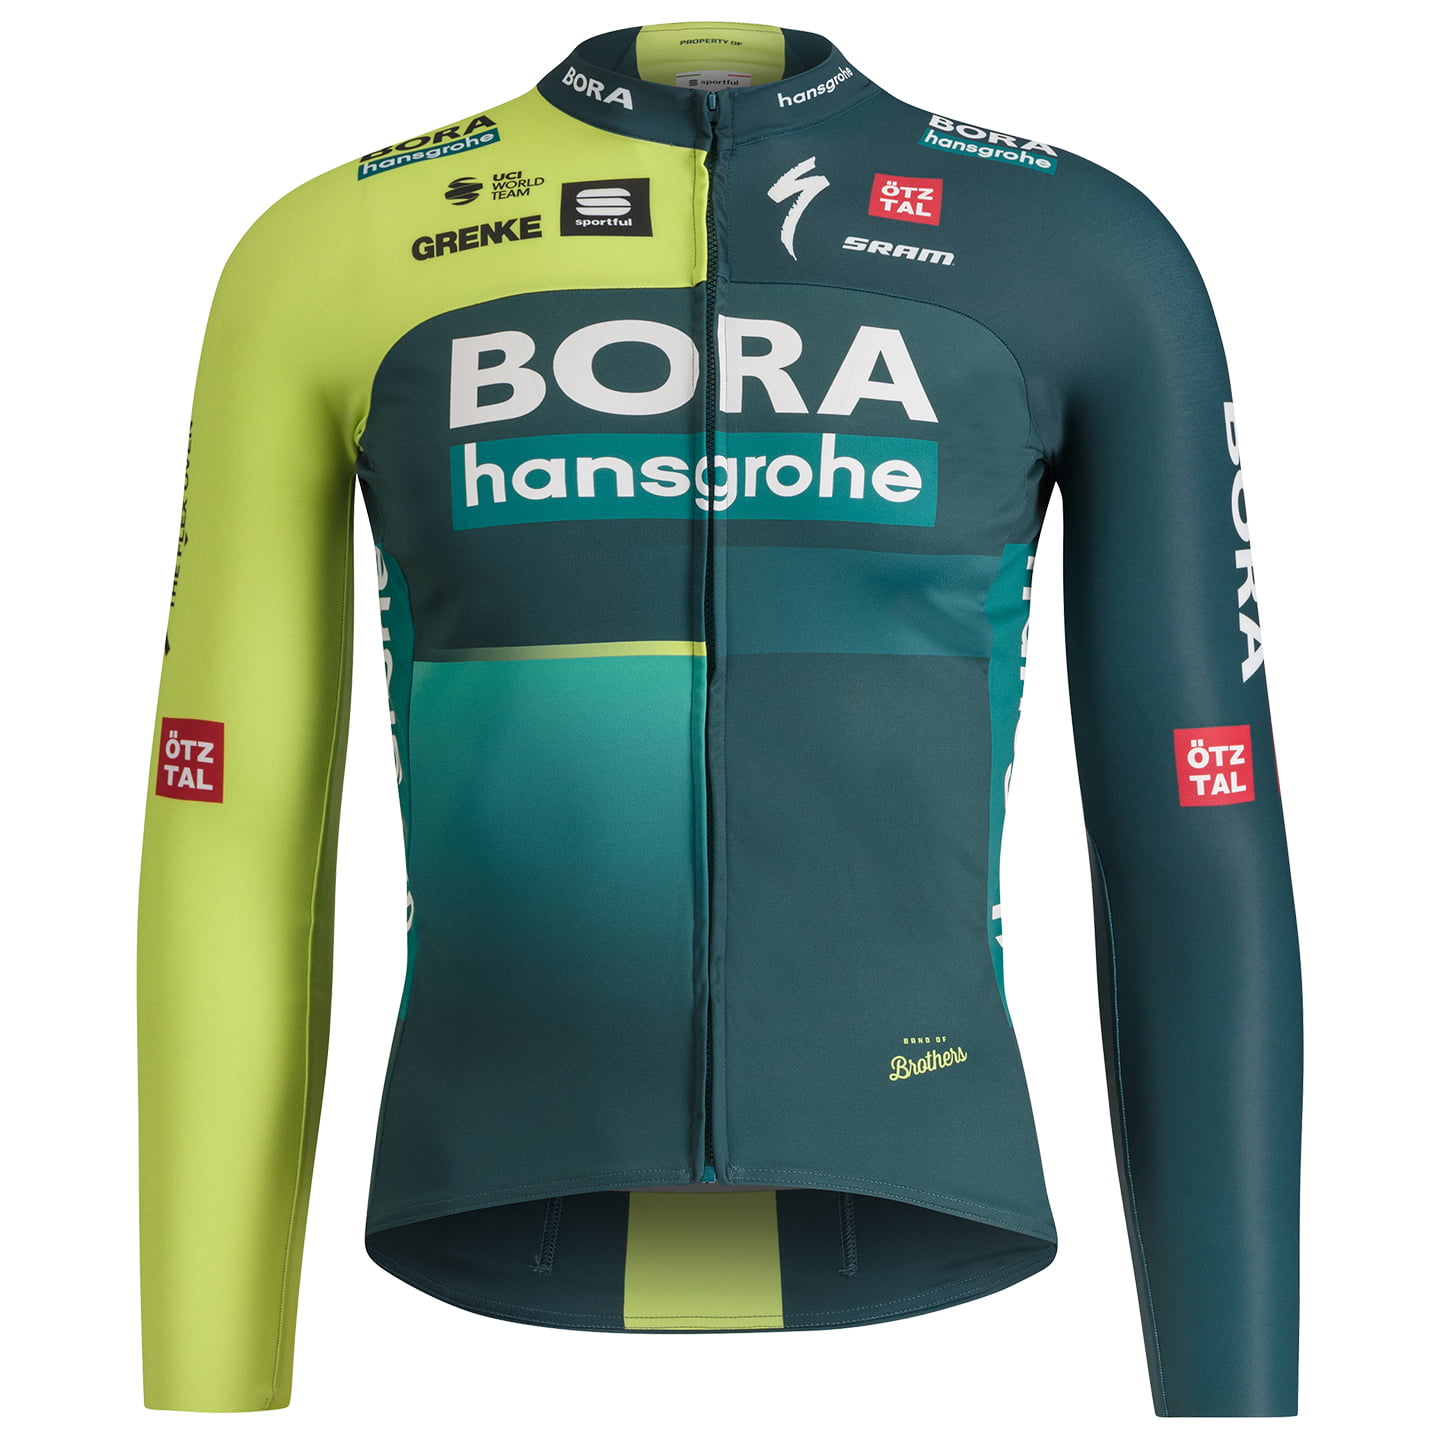 BORA-hansgrohe 2024 Long Sleeve Jersey, for men, size 2XL, Cycle shirt, Bike gear